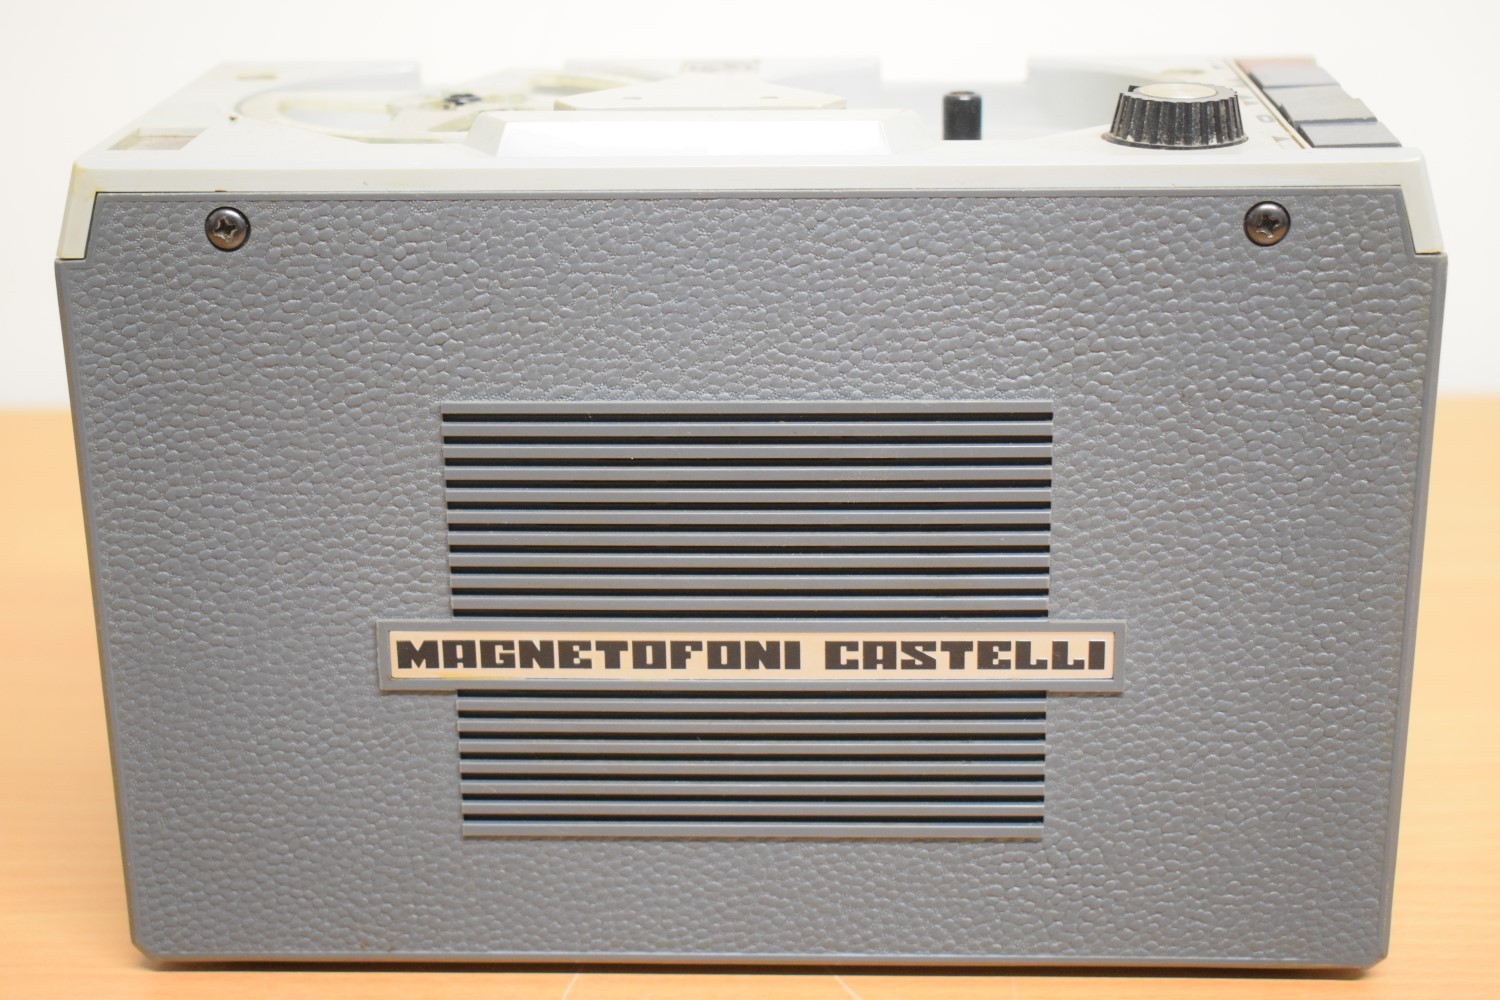 Magnetofoni Castelli S2001 Draagbare buizen bandrecorder